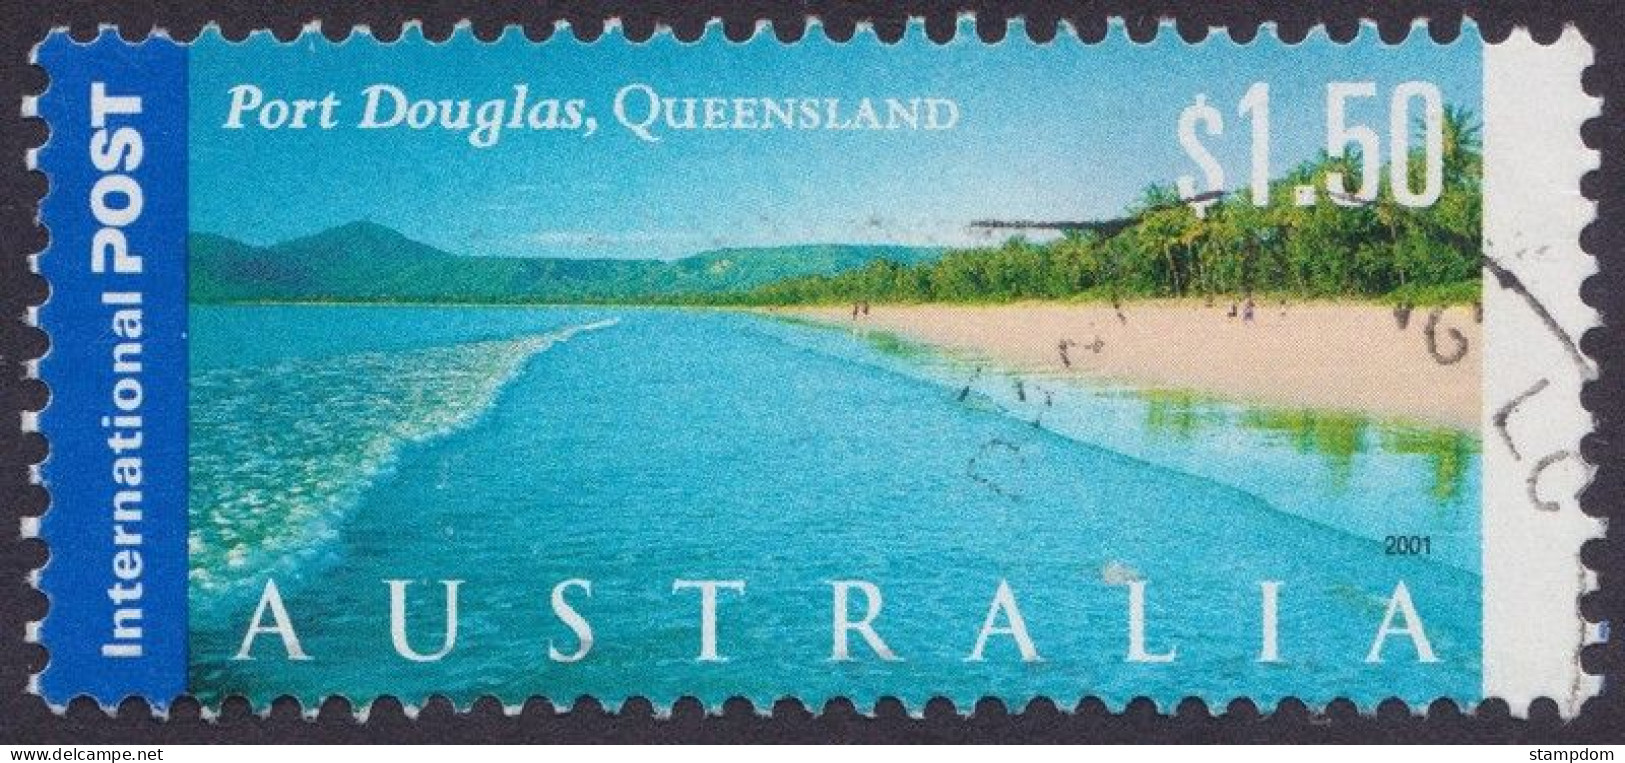 AUSTRALIA 2001 Tourist Attractions $1.50 Port Douglas Sc#1981 USED @O383 - Gebruikt